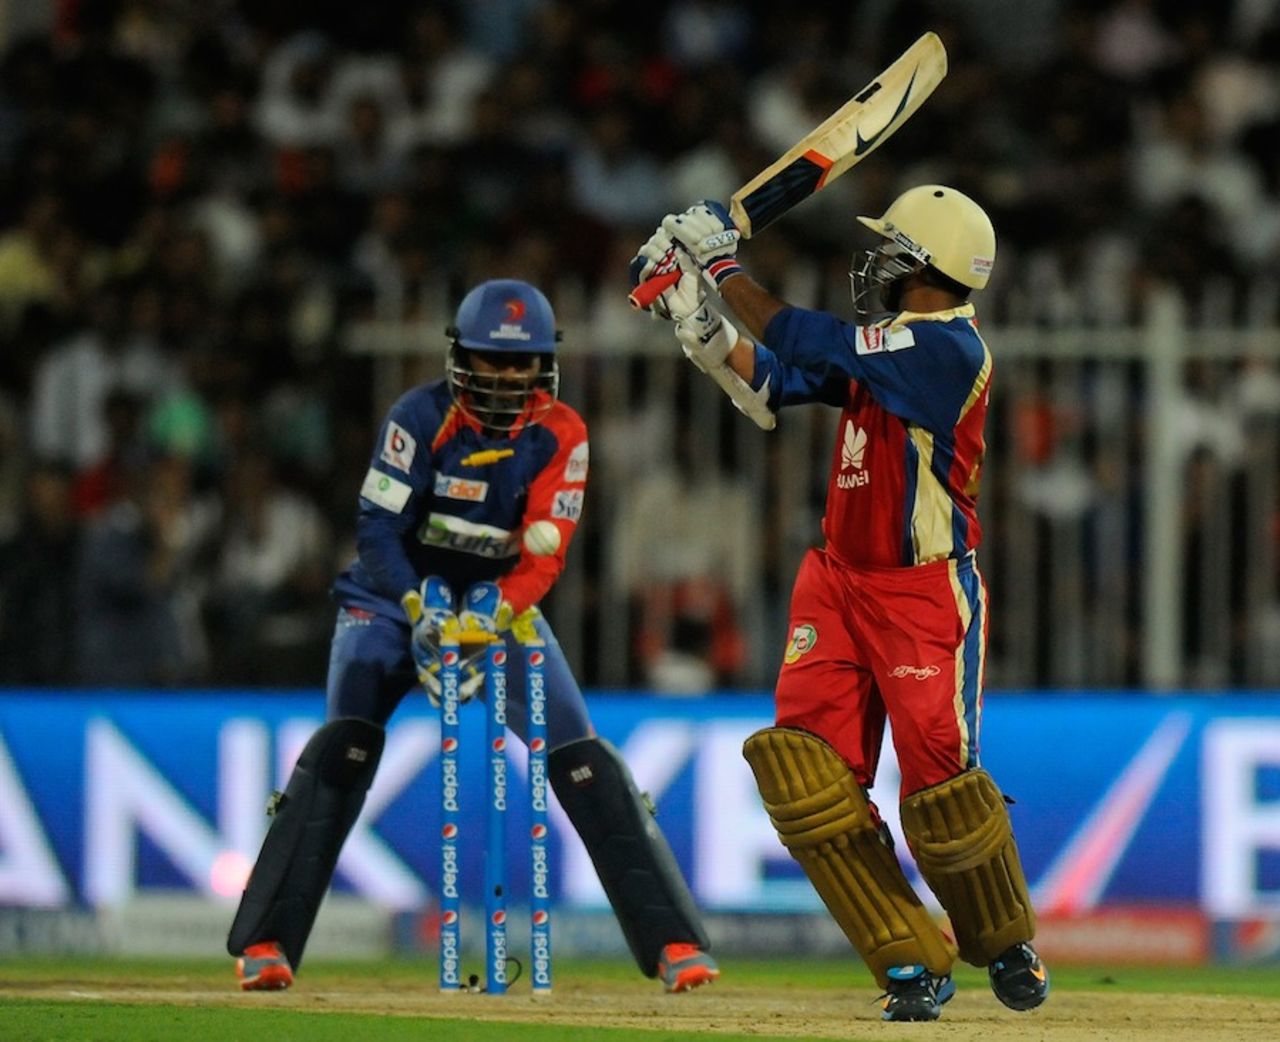 Parthiv Patel was bowled for 37, Royal Challengers Bangalore v Delhi Daredevils, IPL 2014, Sharjah, April 17, 2014